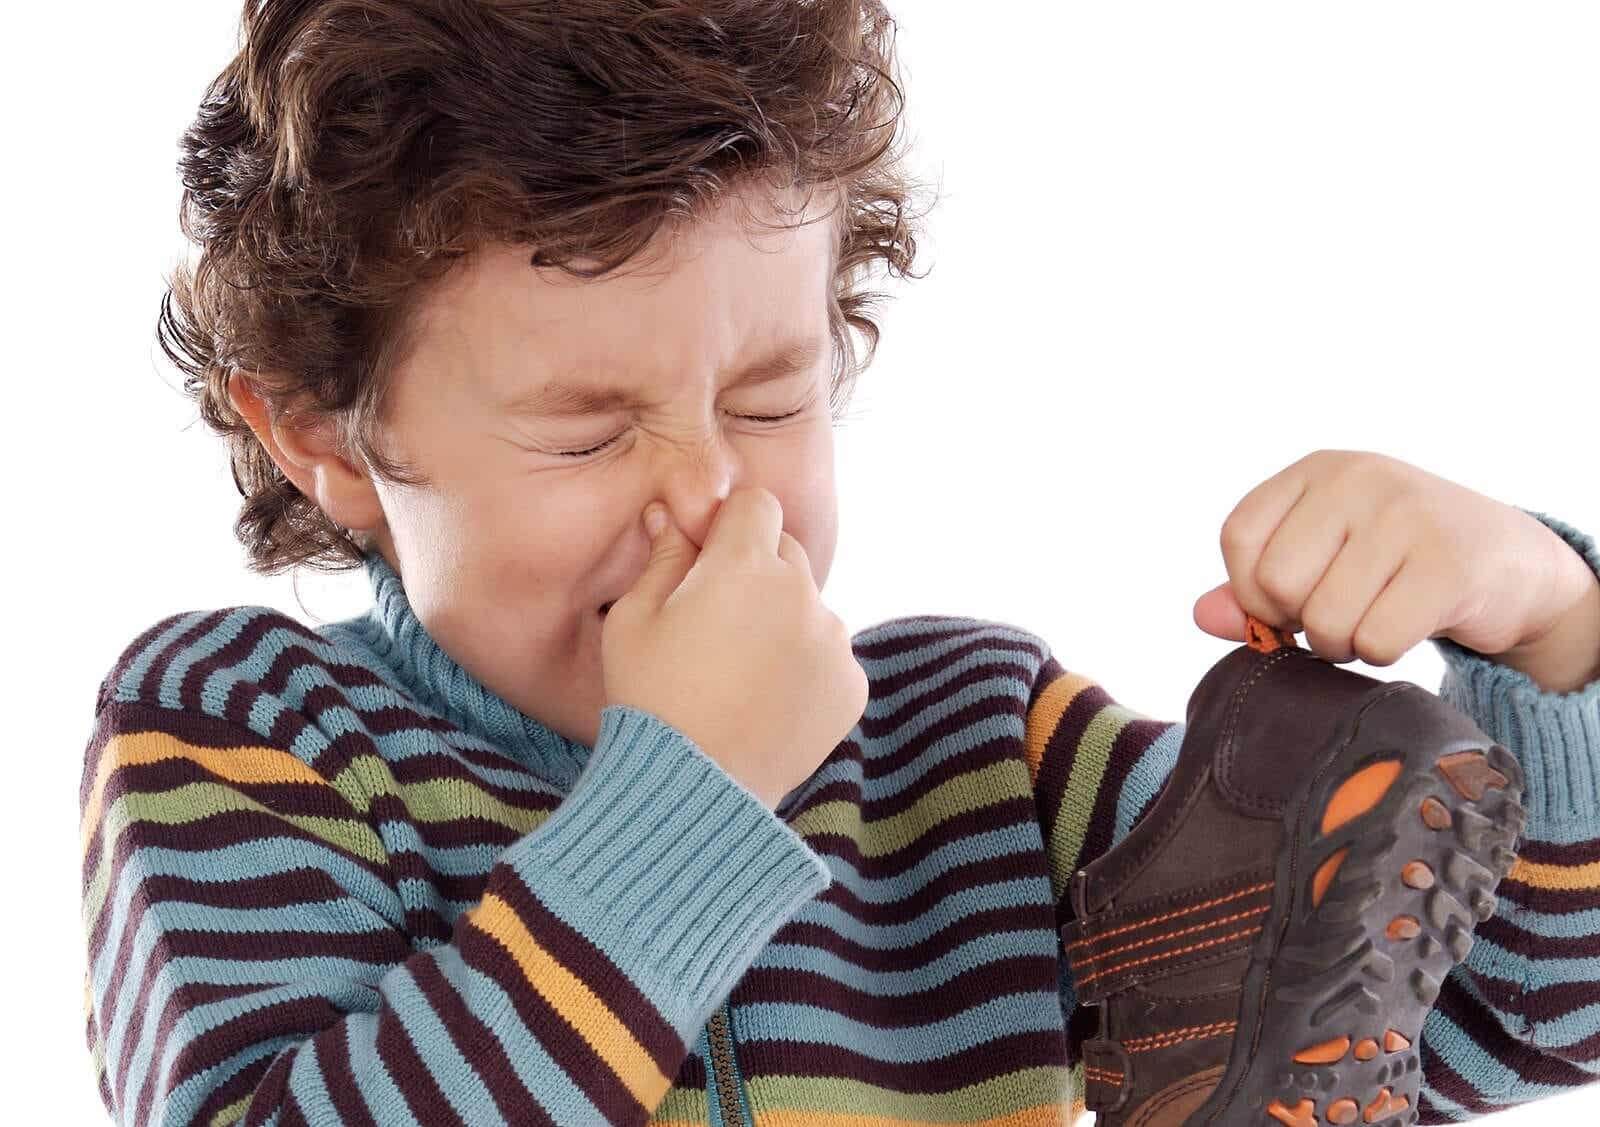 10 Tips to Prevent Foot Odor in Children